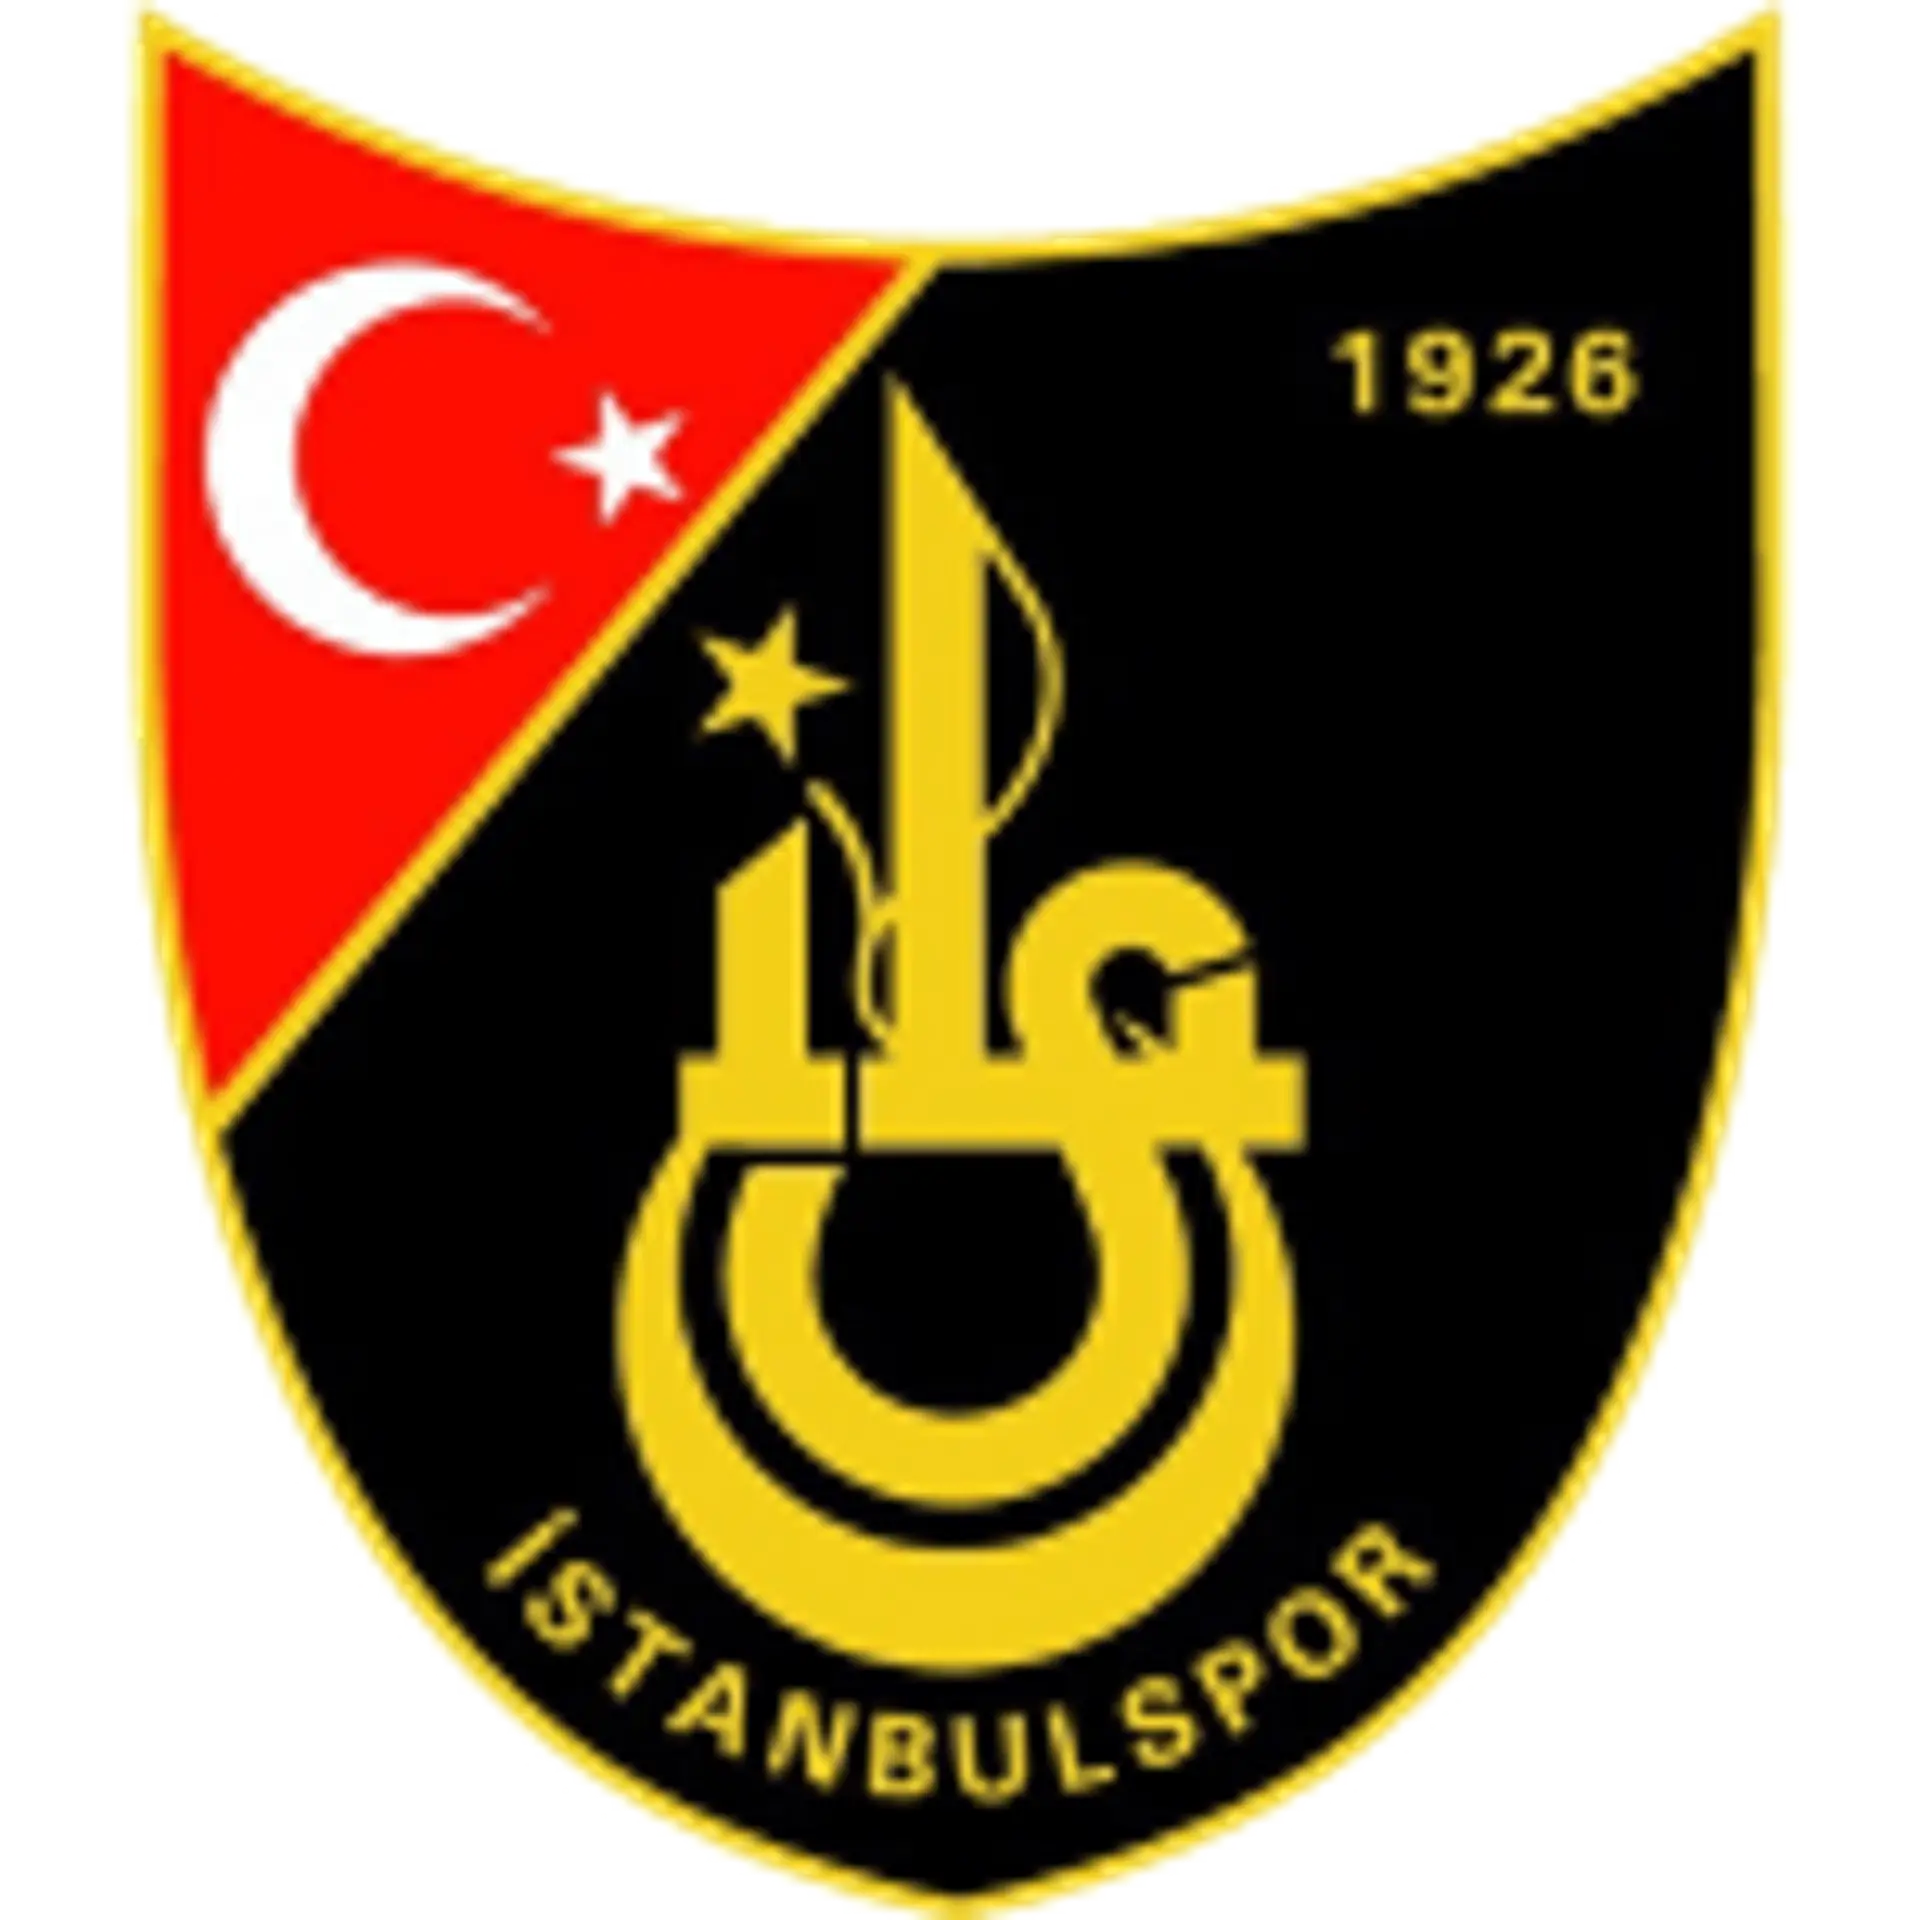 İstanbulspor vs Besiktas JK: Live Score, Stream and H2H results 2/24/2024.  Preview match İstanbulspor vs Besiktas JK, team, start time.